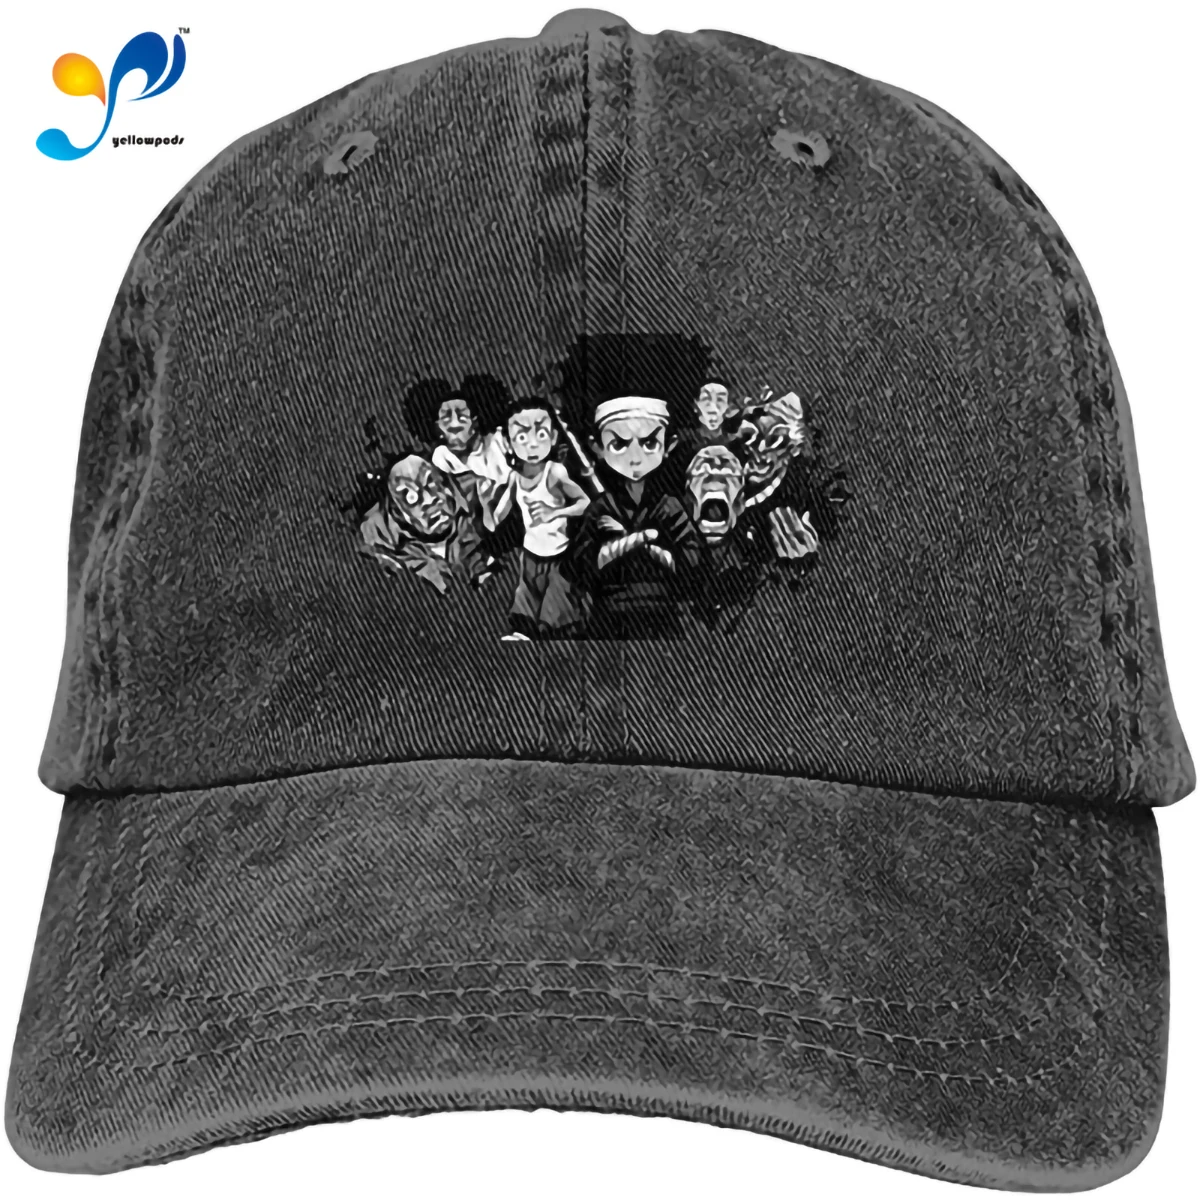 

Hats For Women JamesMMika The Boondocks Baseball Cap Cowboys Adjustable Unisex Hip Hop Snapback Hats Black